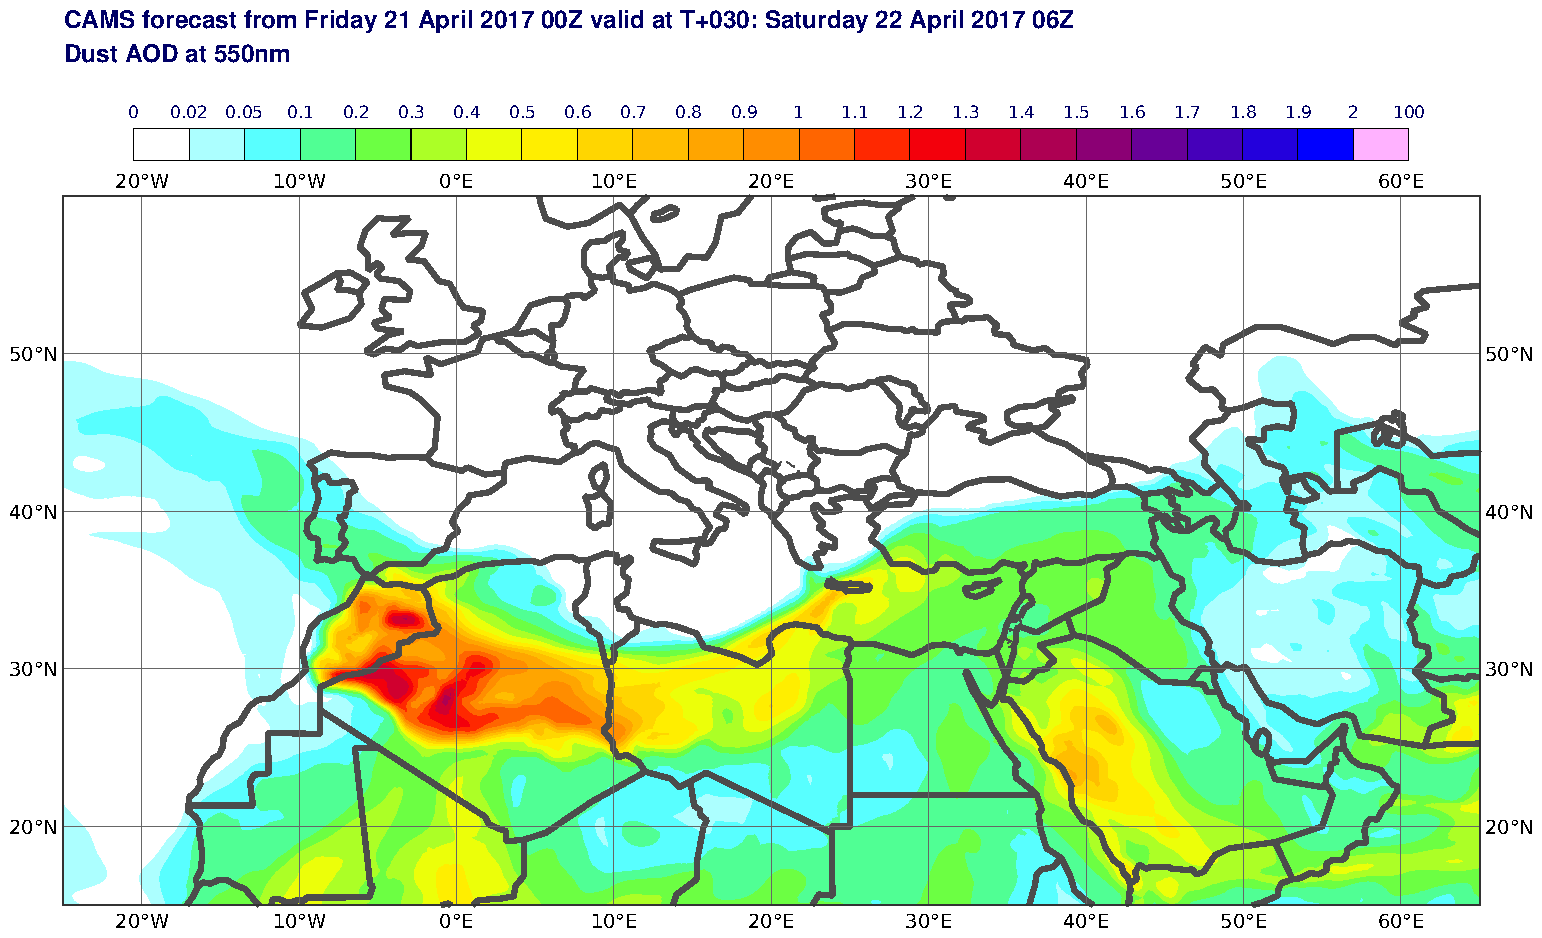 Dust AOD at 550nm valid at T30 - 2017-04-22 06:00